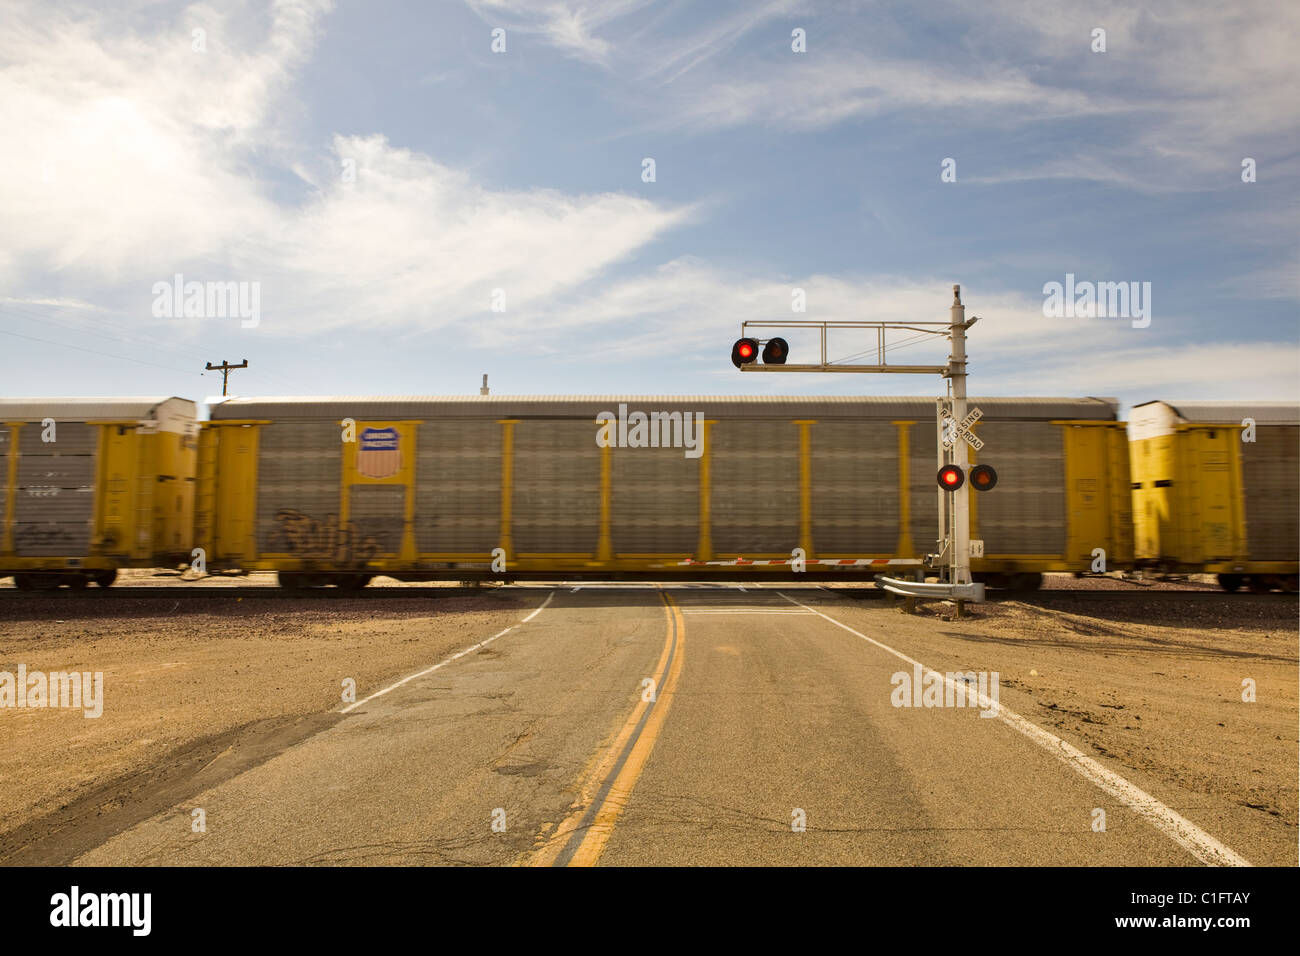 A rural North American train crossing Stock Photo